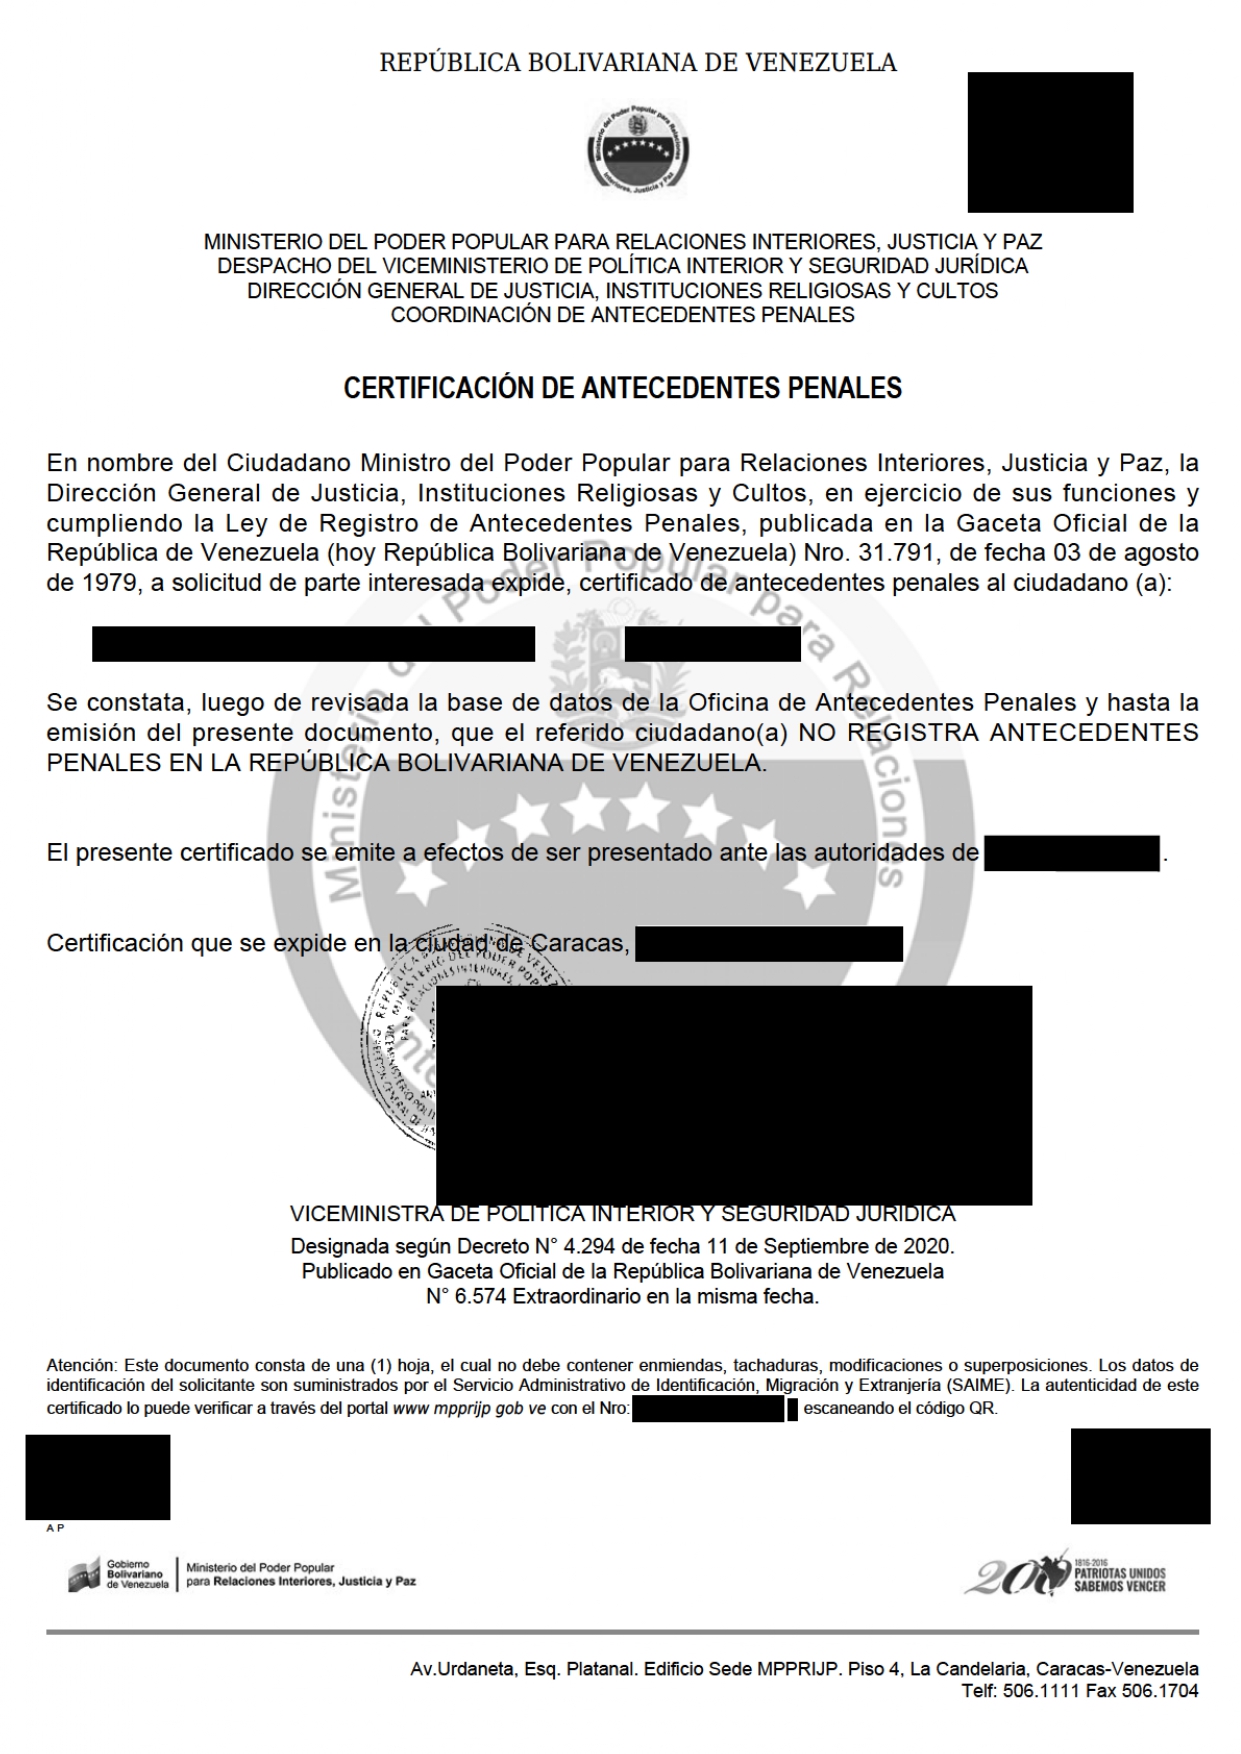 Certified Translation of Venezuelan Criminal Record from Spanish to English